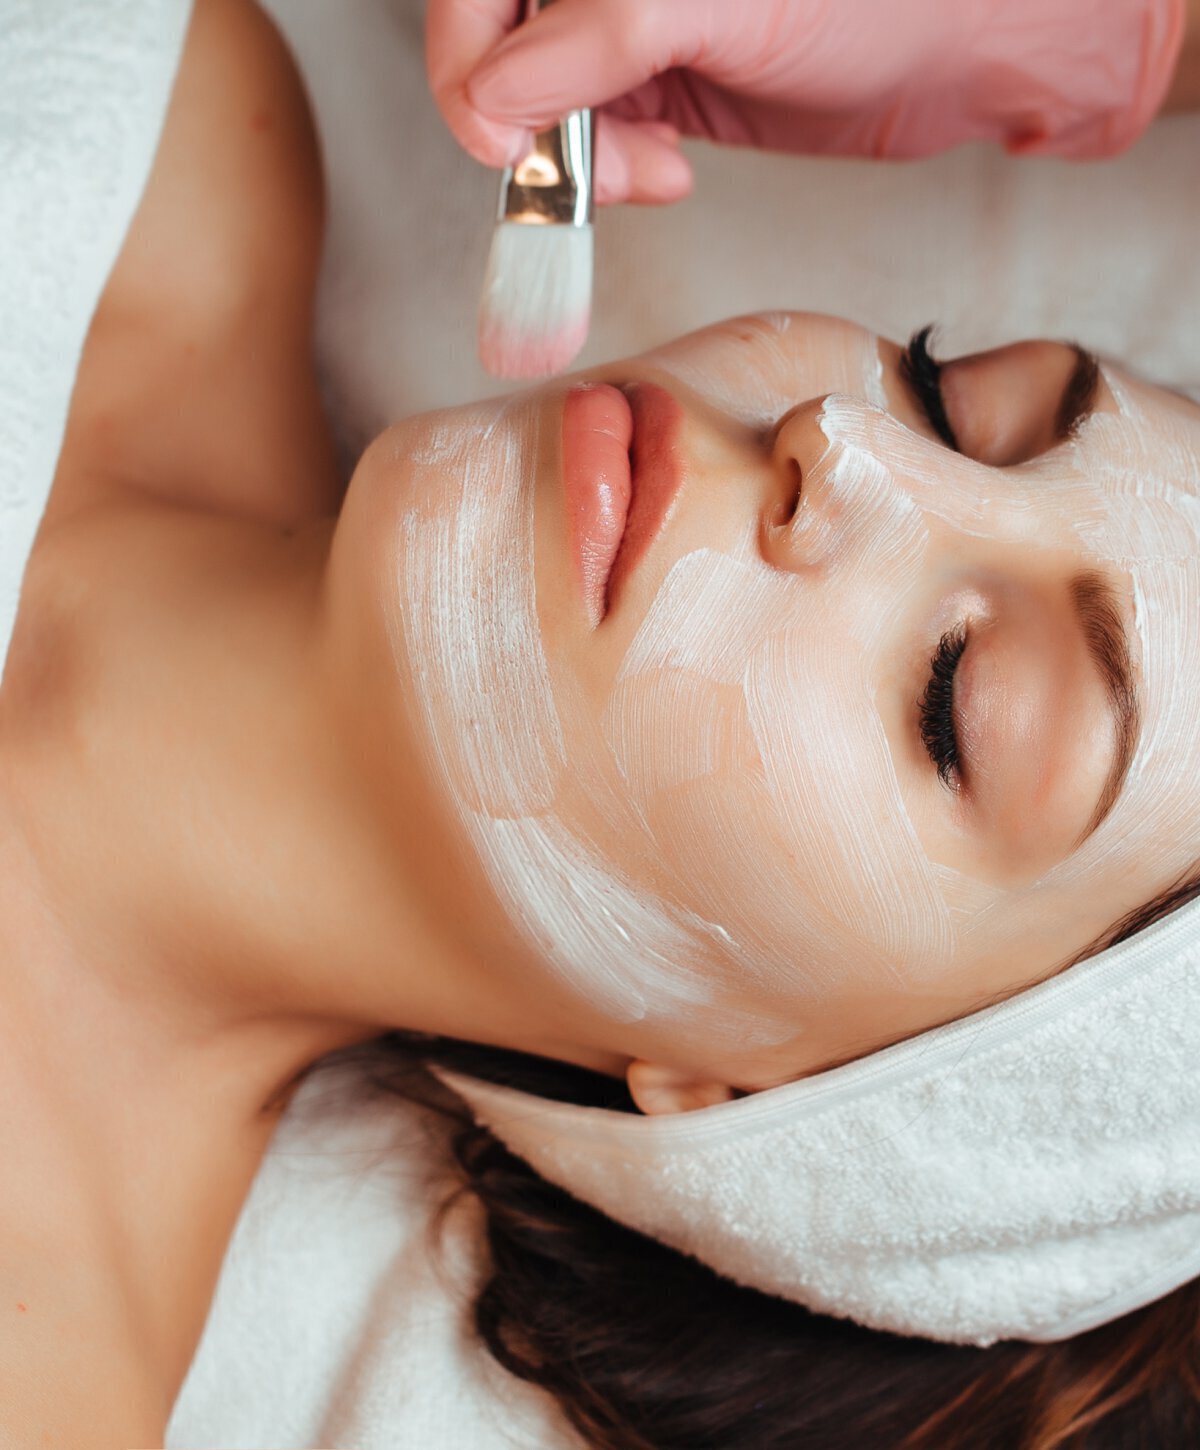 Menlo Park Facial treatment client receiving easterb facial massage